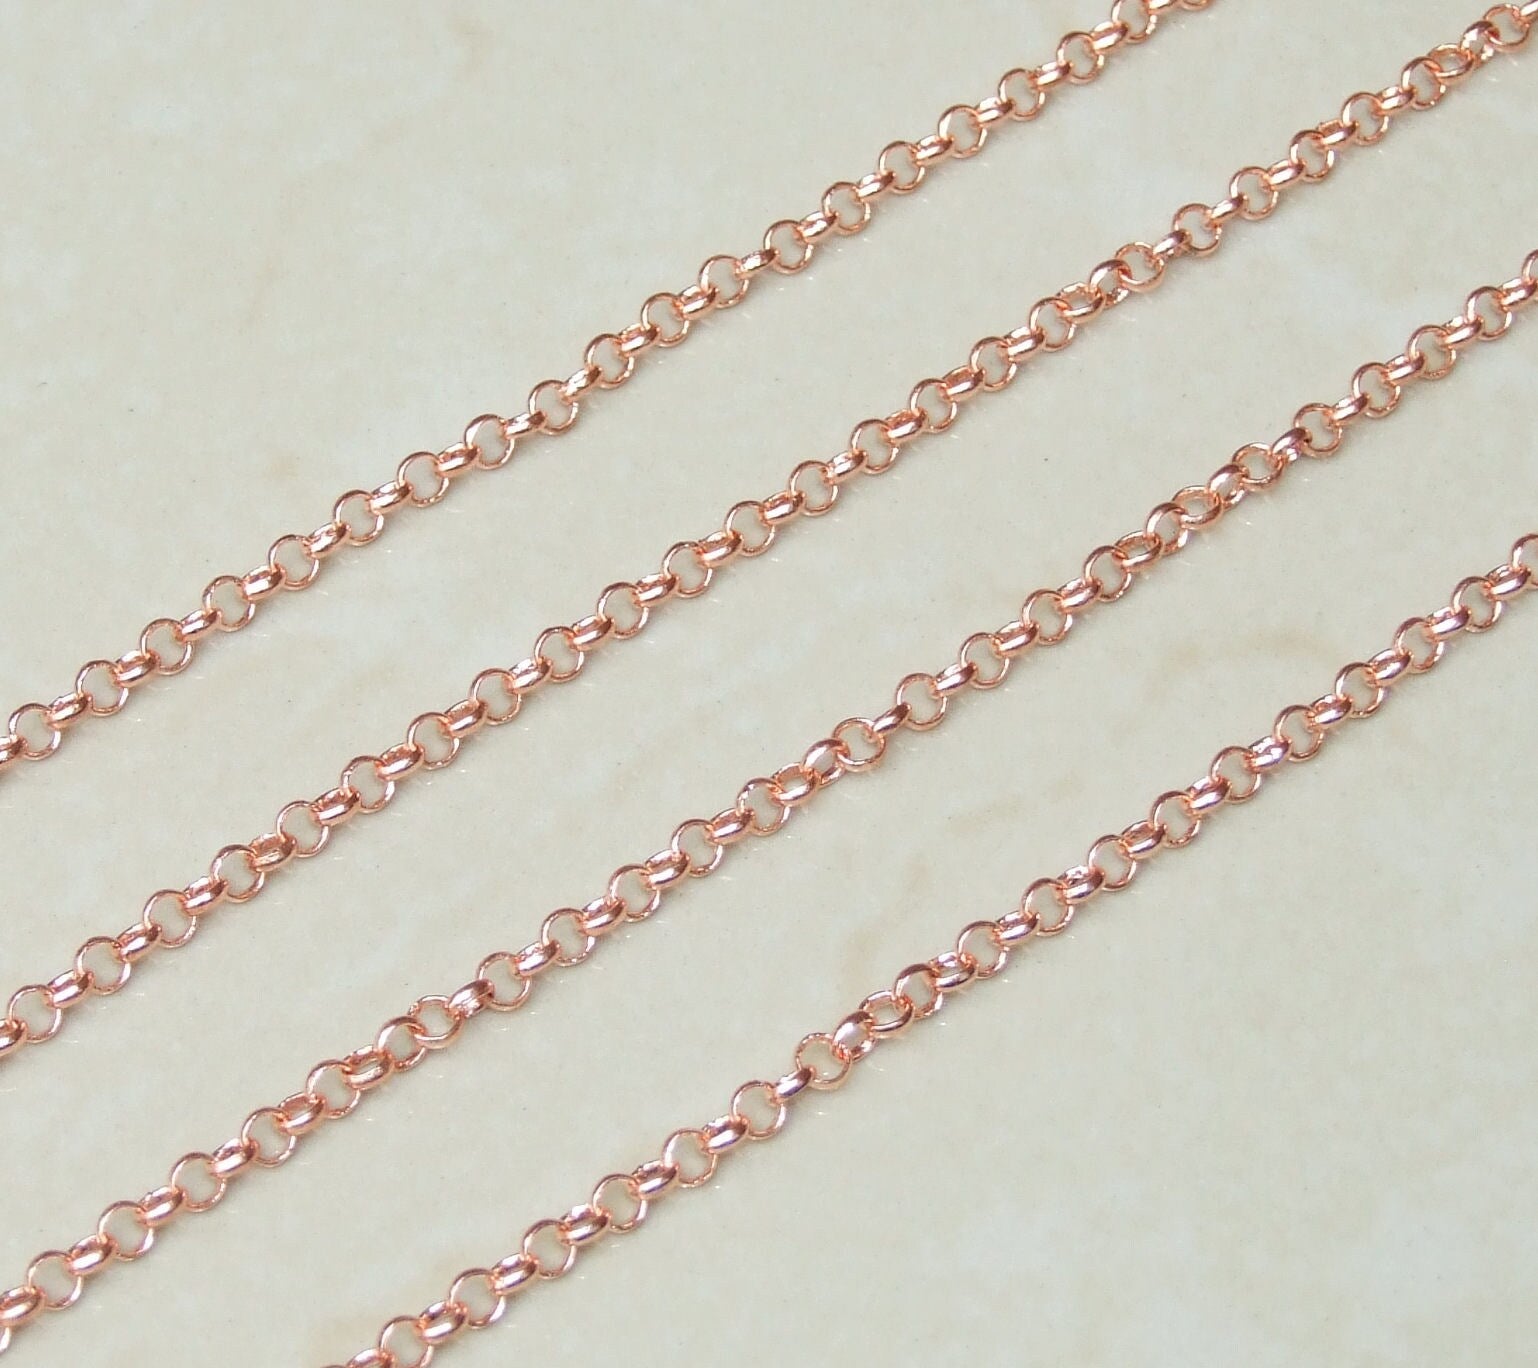 Copper Tone Chain, Rolo Chain, Jewelry Chain, Necklace Chain, Bronze Chain, Body Chain, Belly Chain, Bulk Chain, Jewelry Supplies, 4mm, 78RG